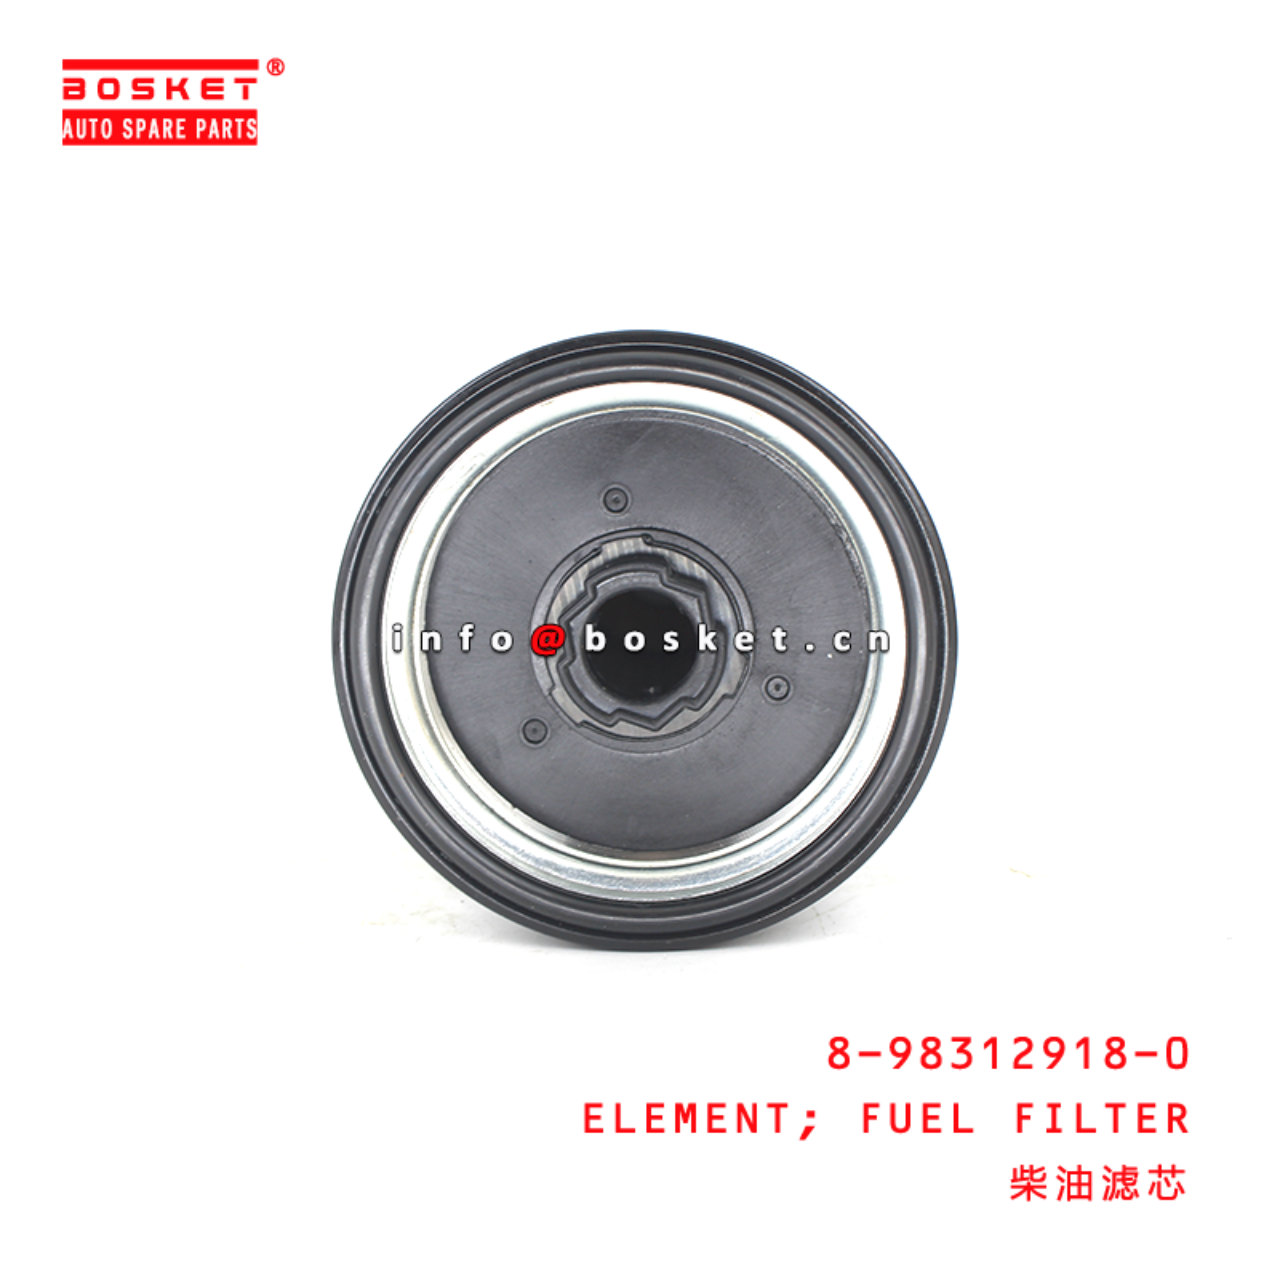 8-98312918-0 Fuel Filter Element Suitable for ISUZU 8983129180 